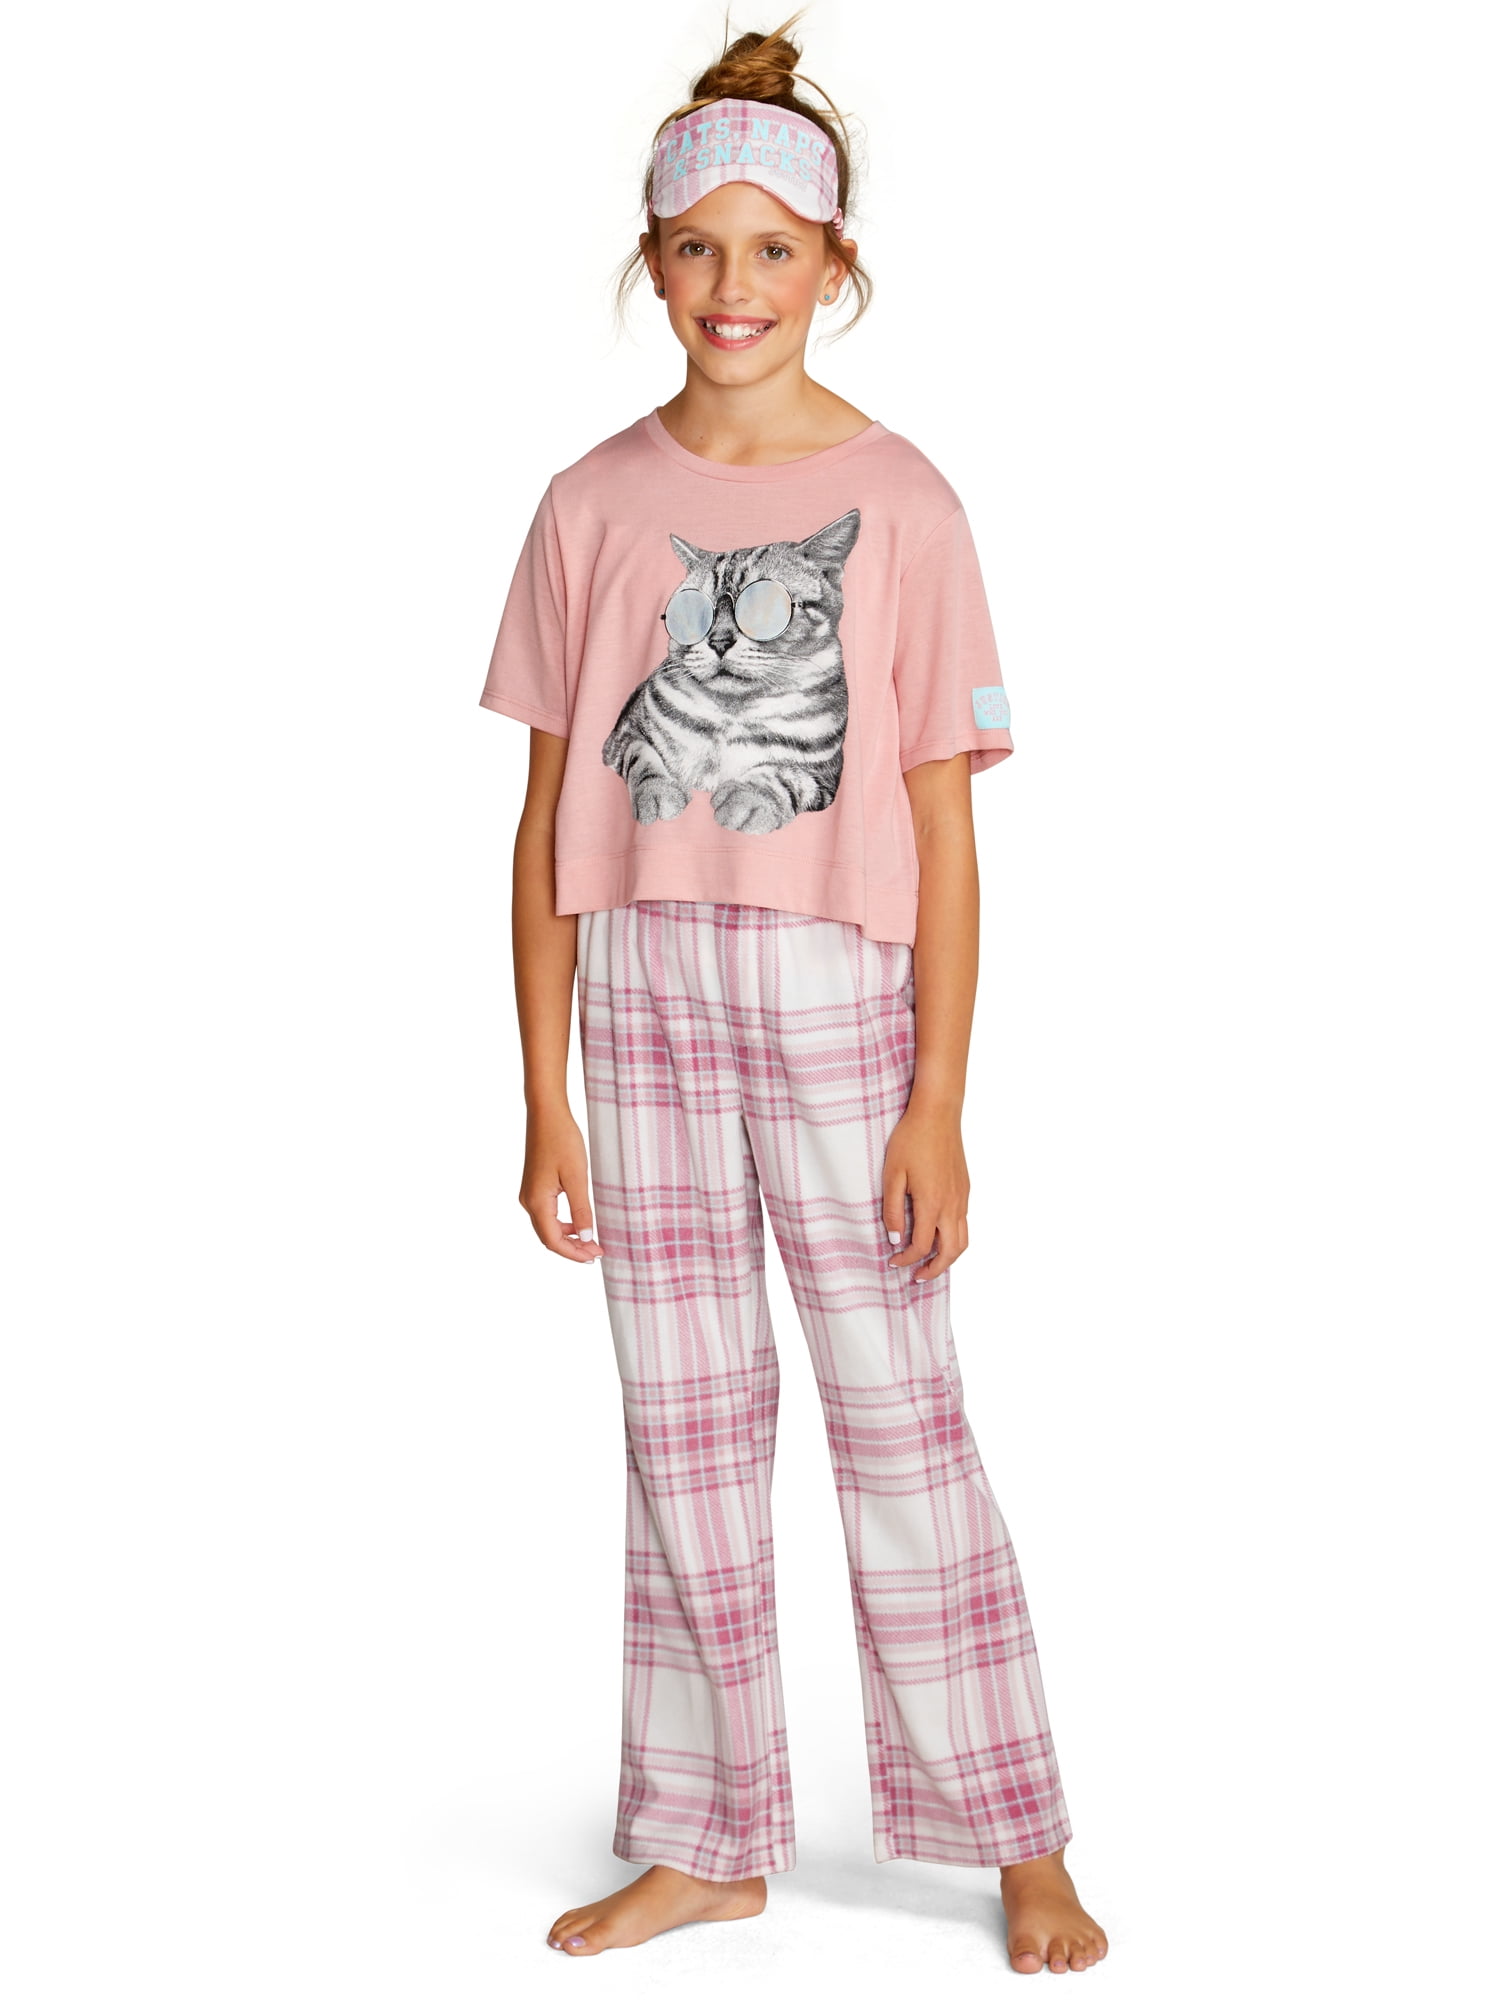 Details about   NEW Carter's 3T 4 5 Girls 2 Piece Fleece PJs Pajamas Holiday Unicorn Top & Pants 